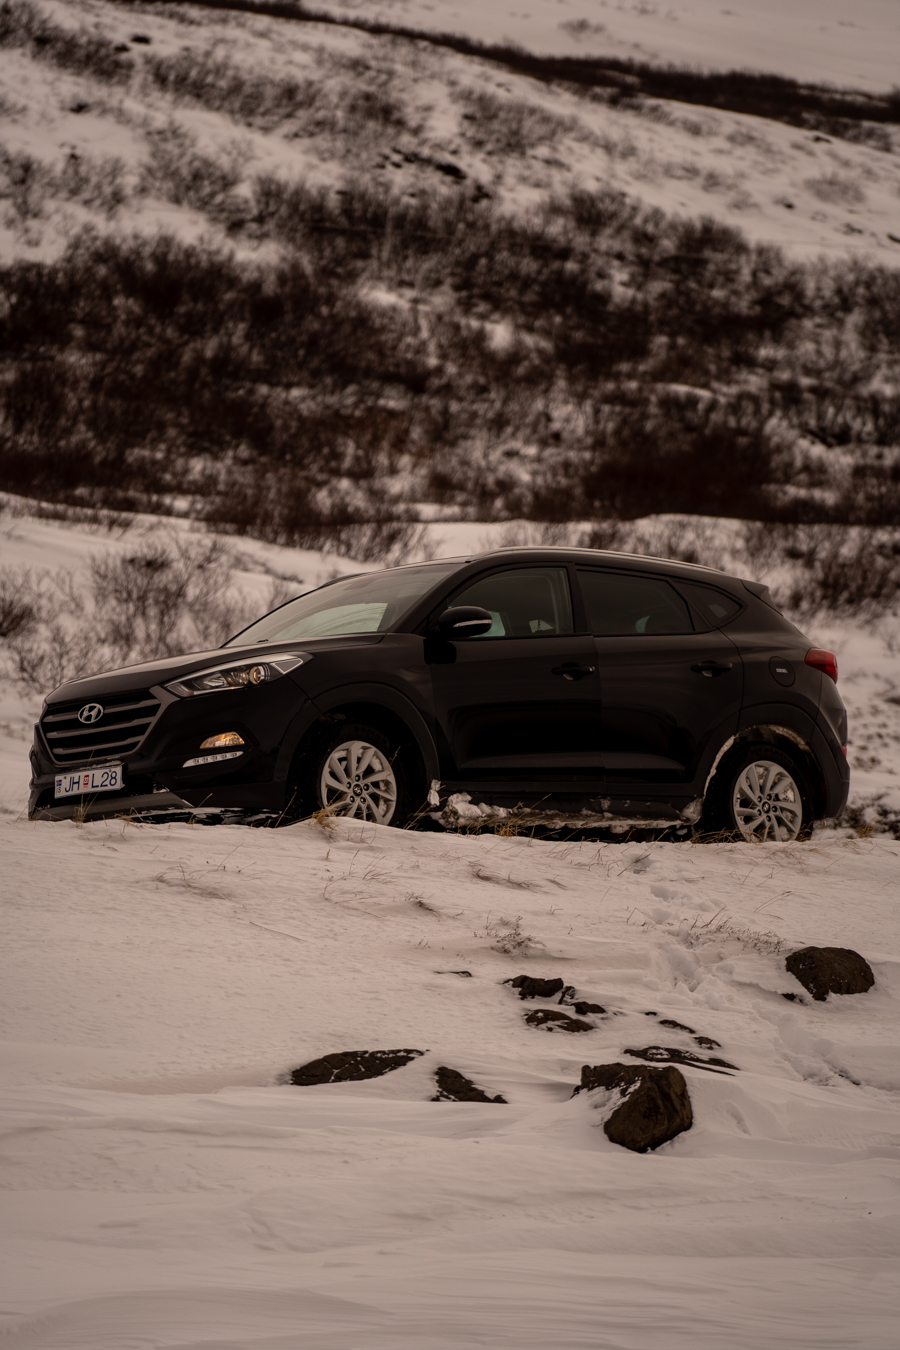 Poiščite Hyundai Tucson za najem na Islandiji